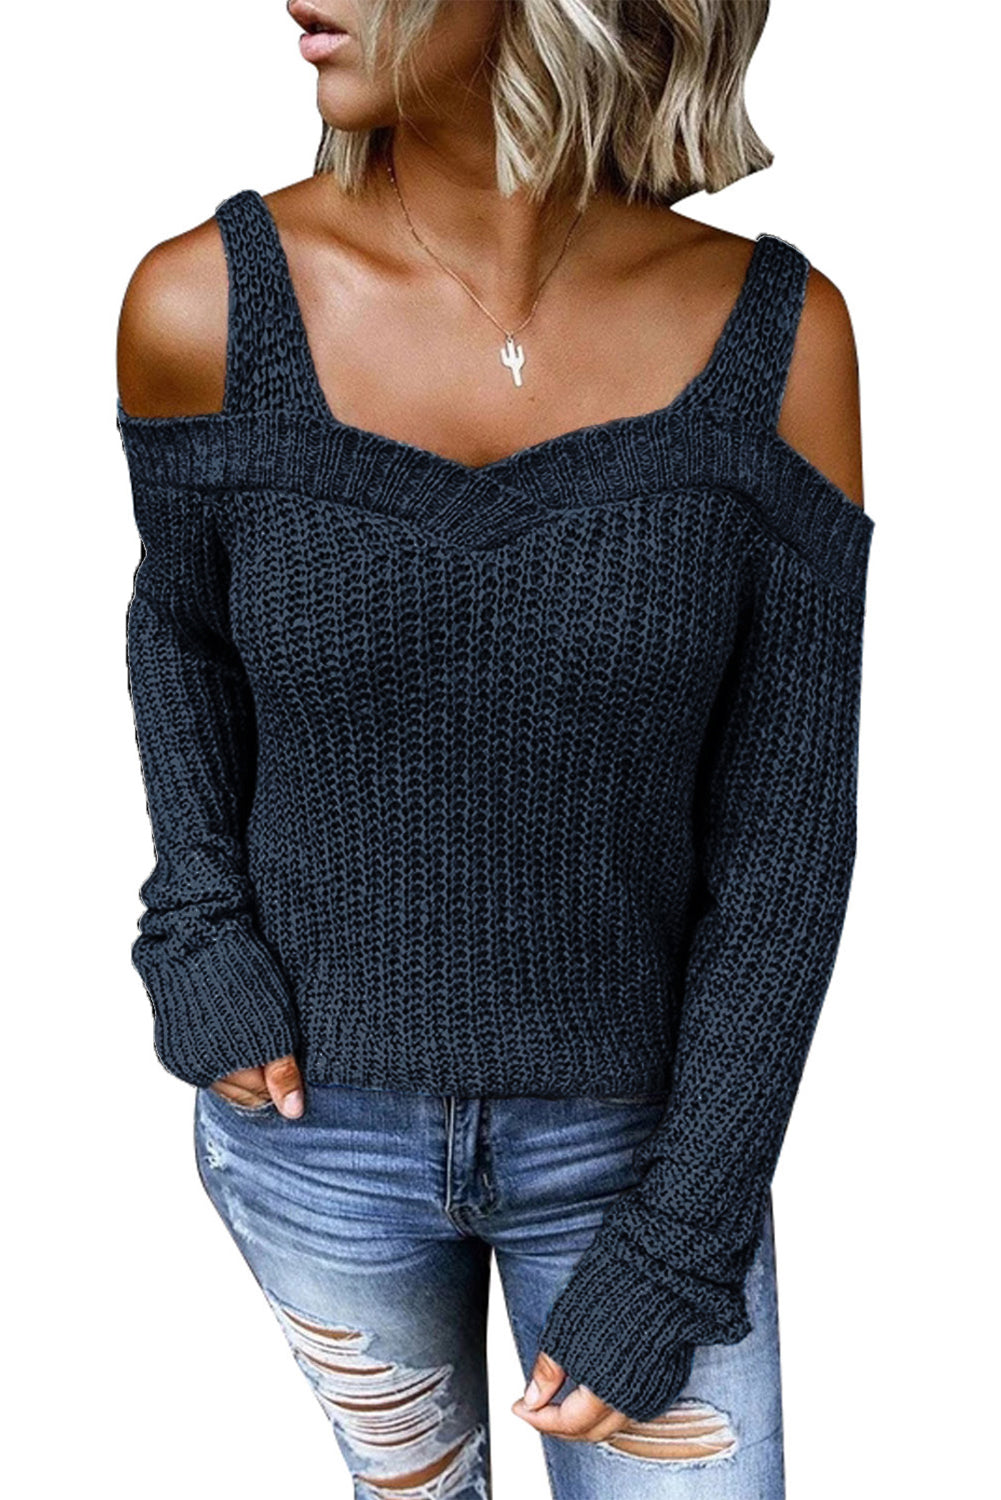 Tamnoplavi pleteni pulover Juliette na ramena